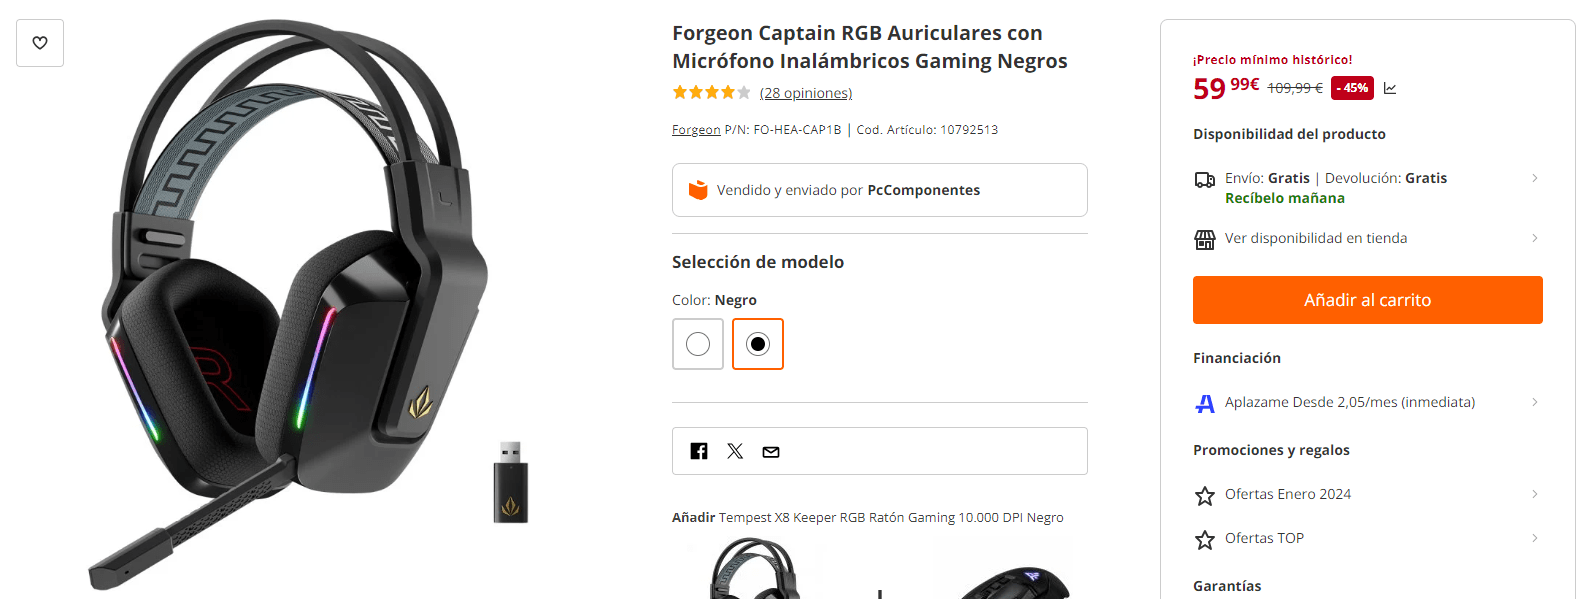 Forgeon Captain RGB Auriculares con Micrófono Inalámbricos Gaming Blancos